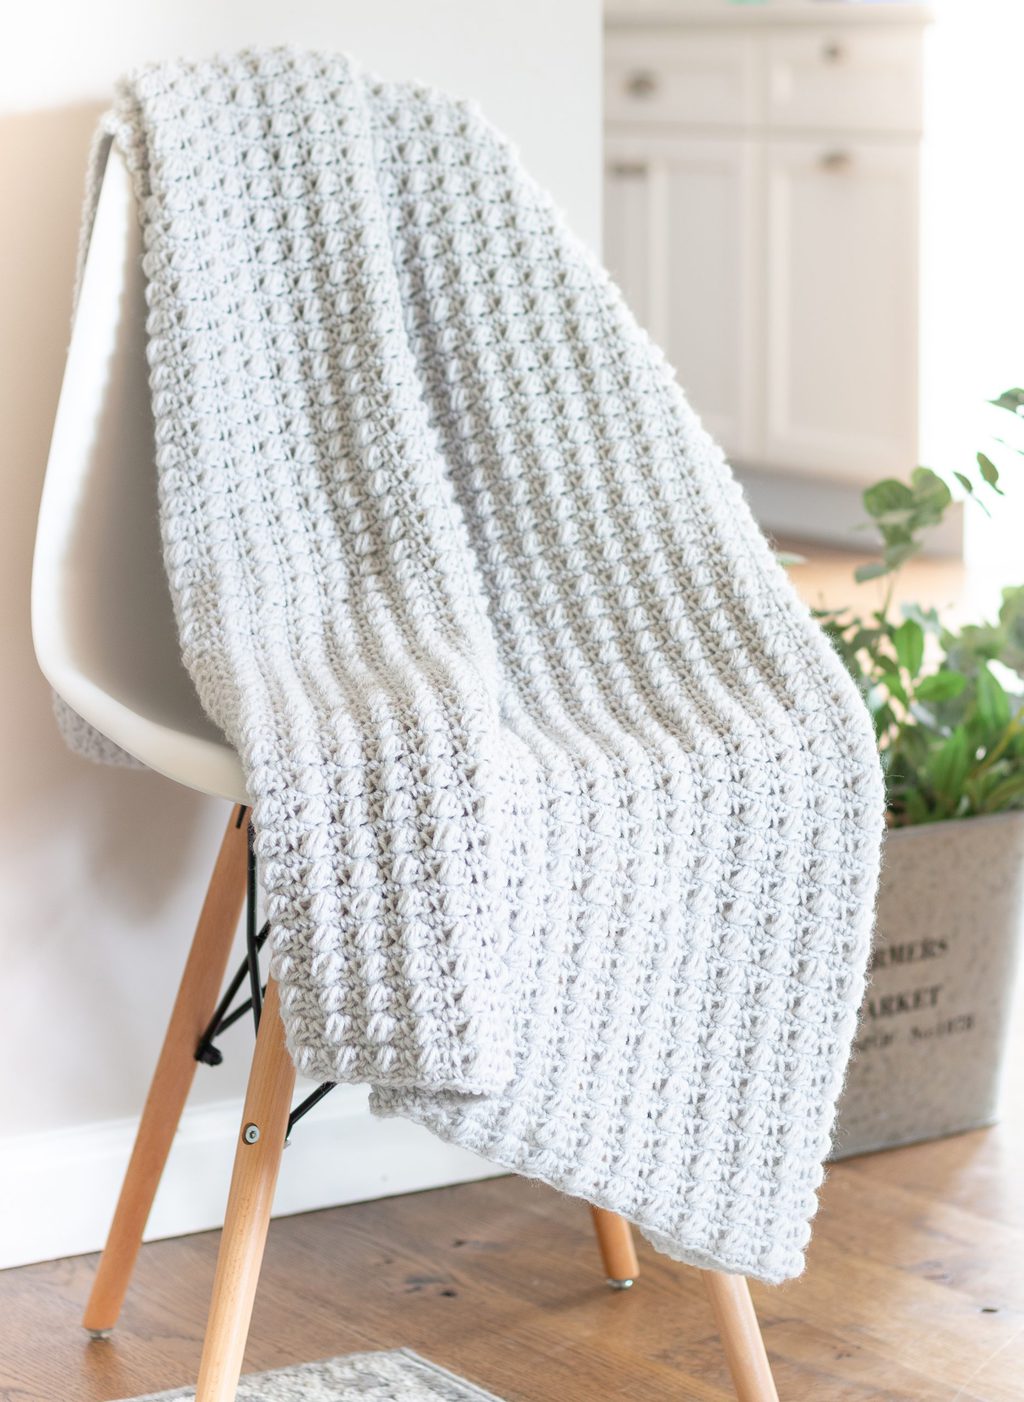 puff stitch crochet blanket pattern in eight sizes